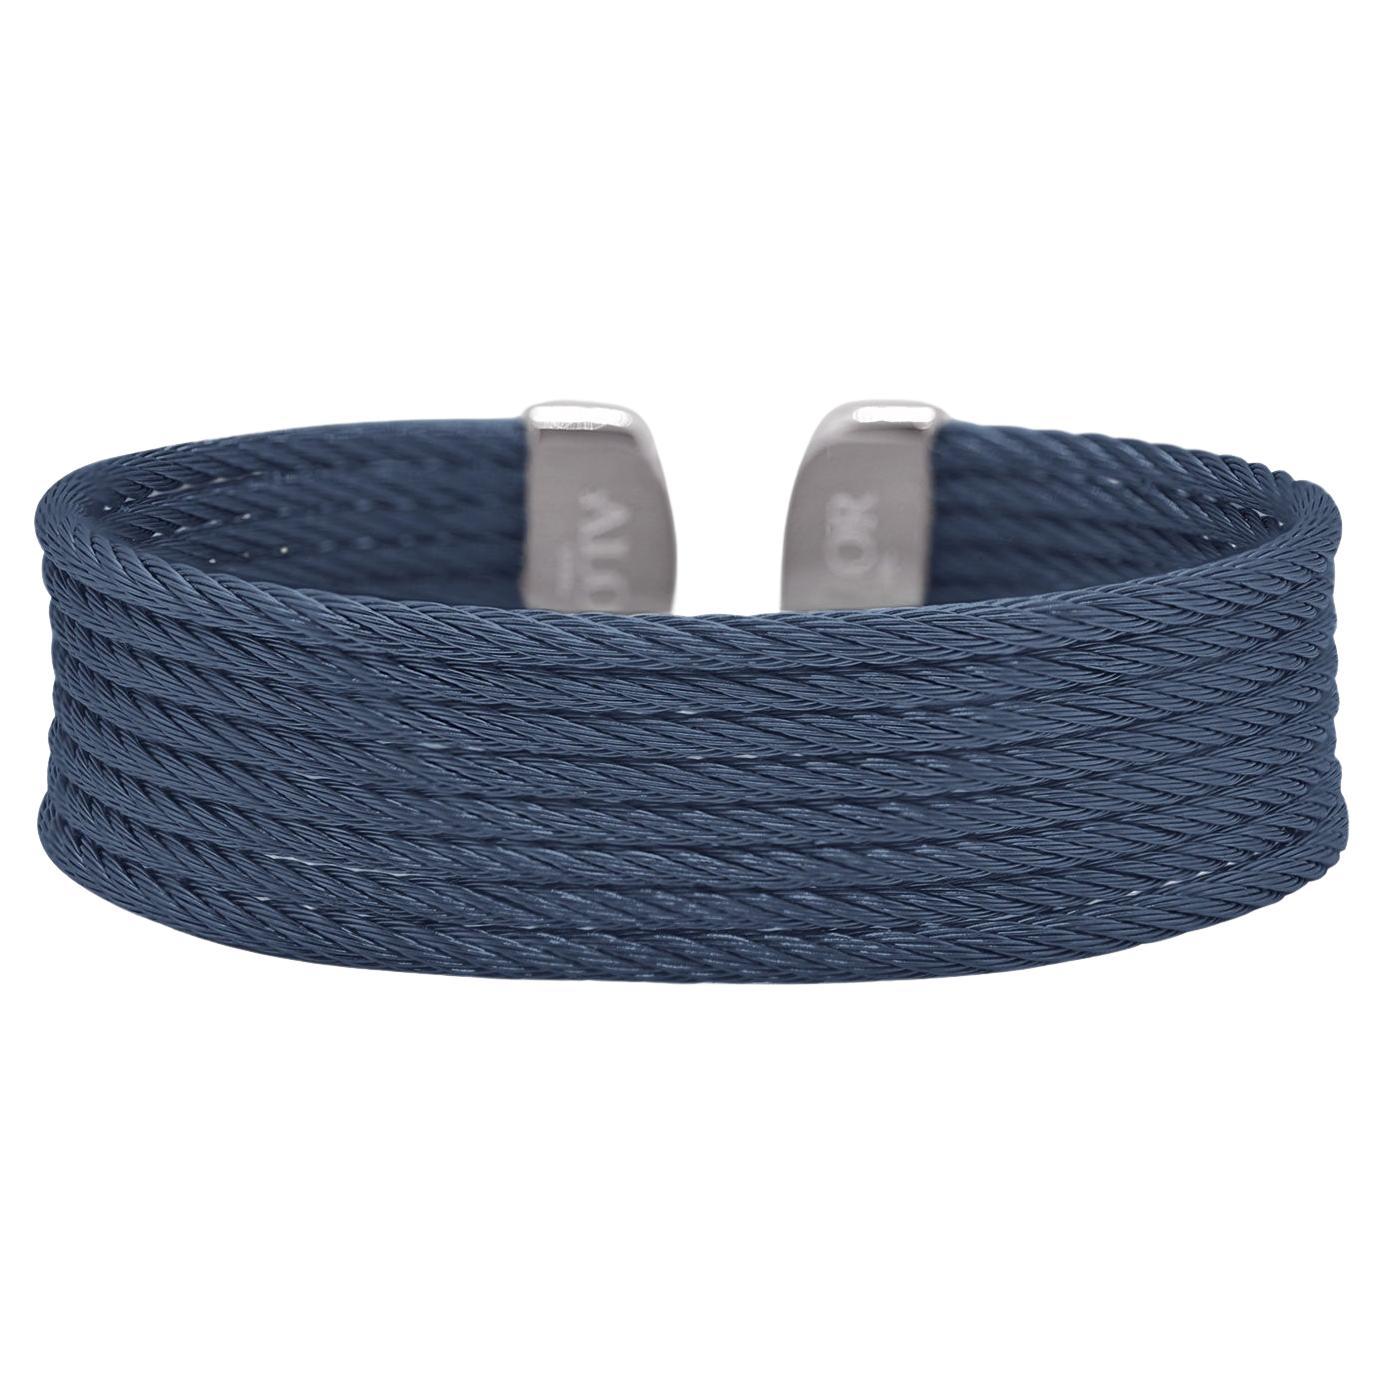 Alor Blueberry Cable Cuff Essentials 8-Row Cuff 04-28-B608-00